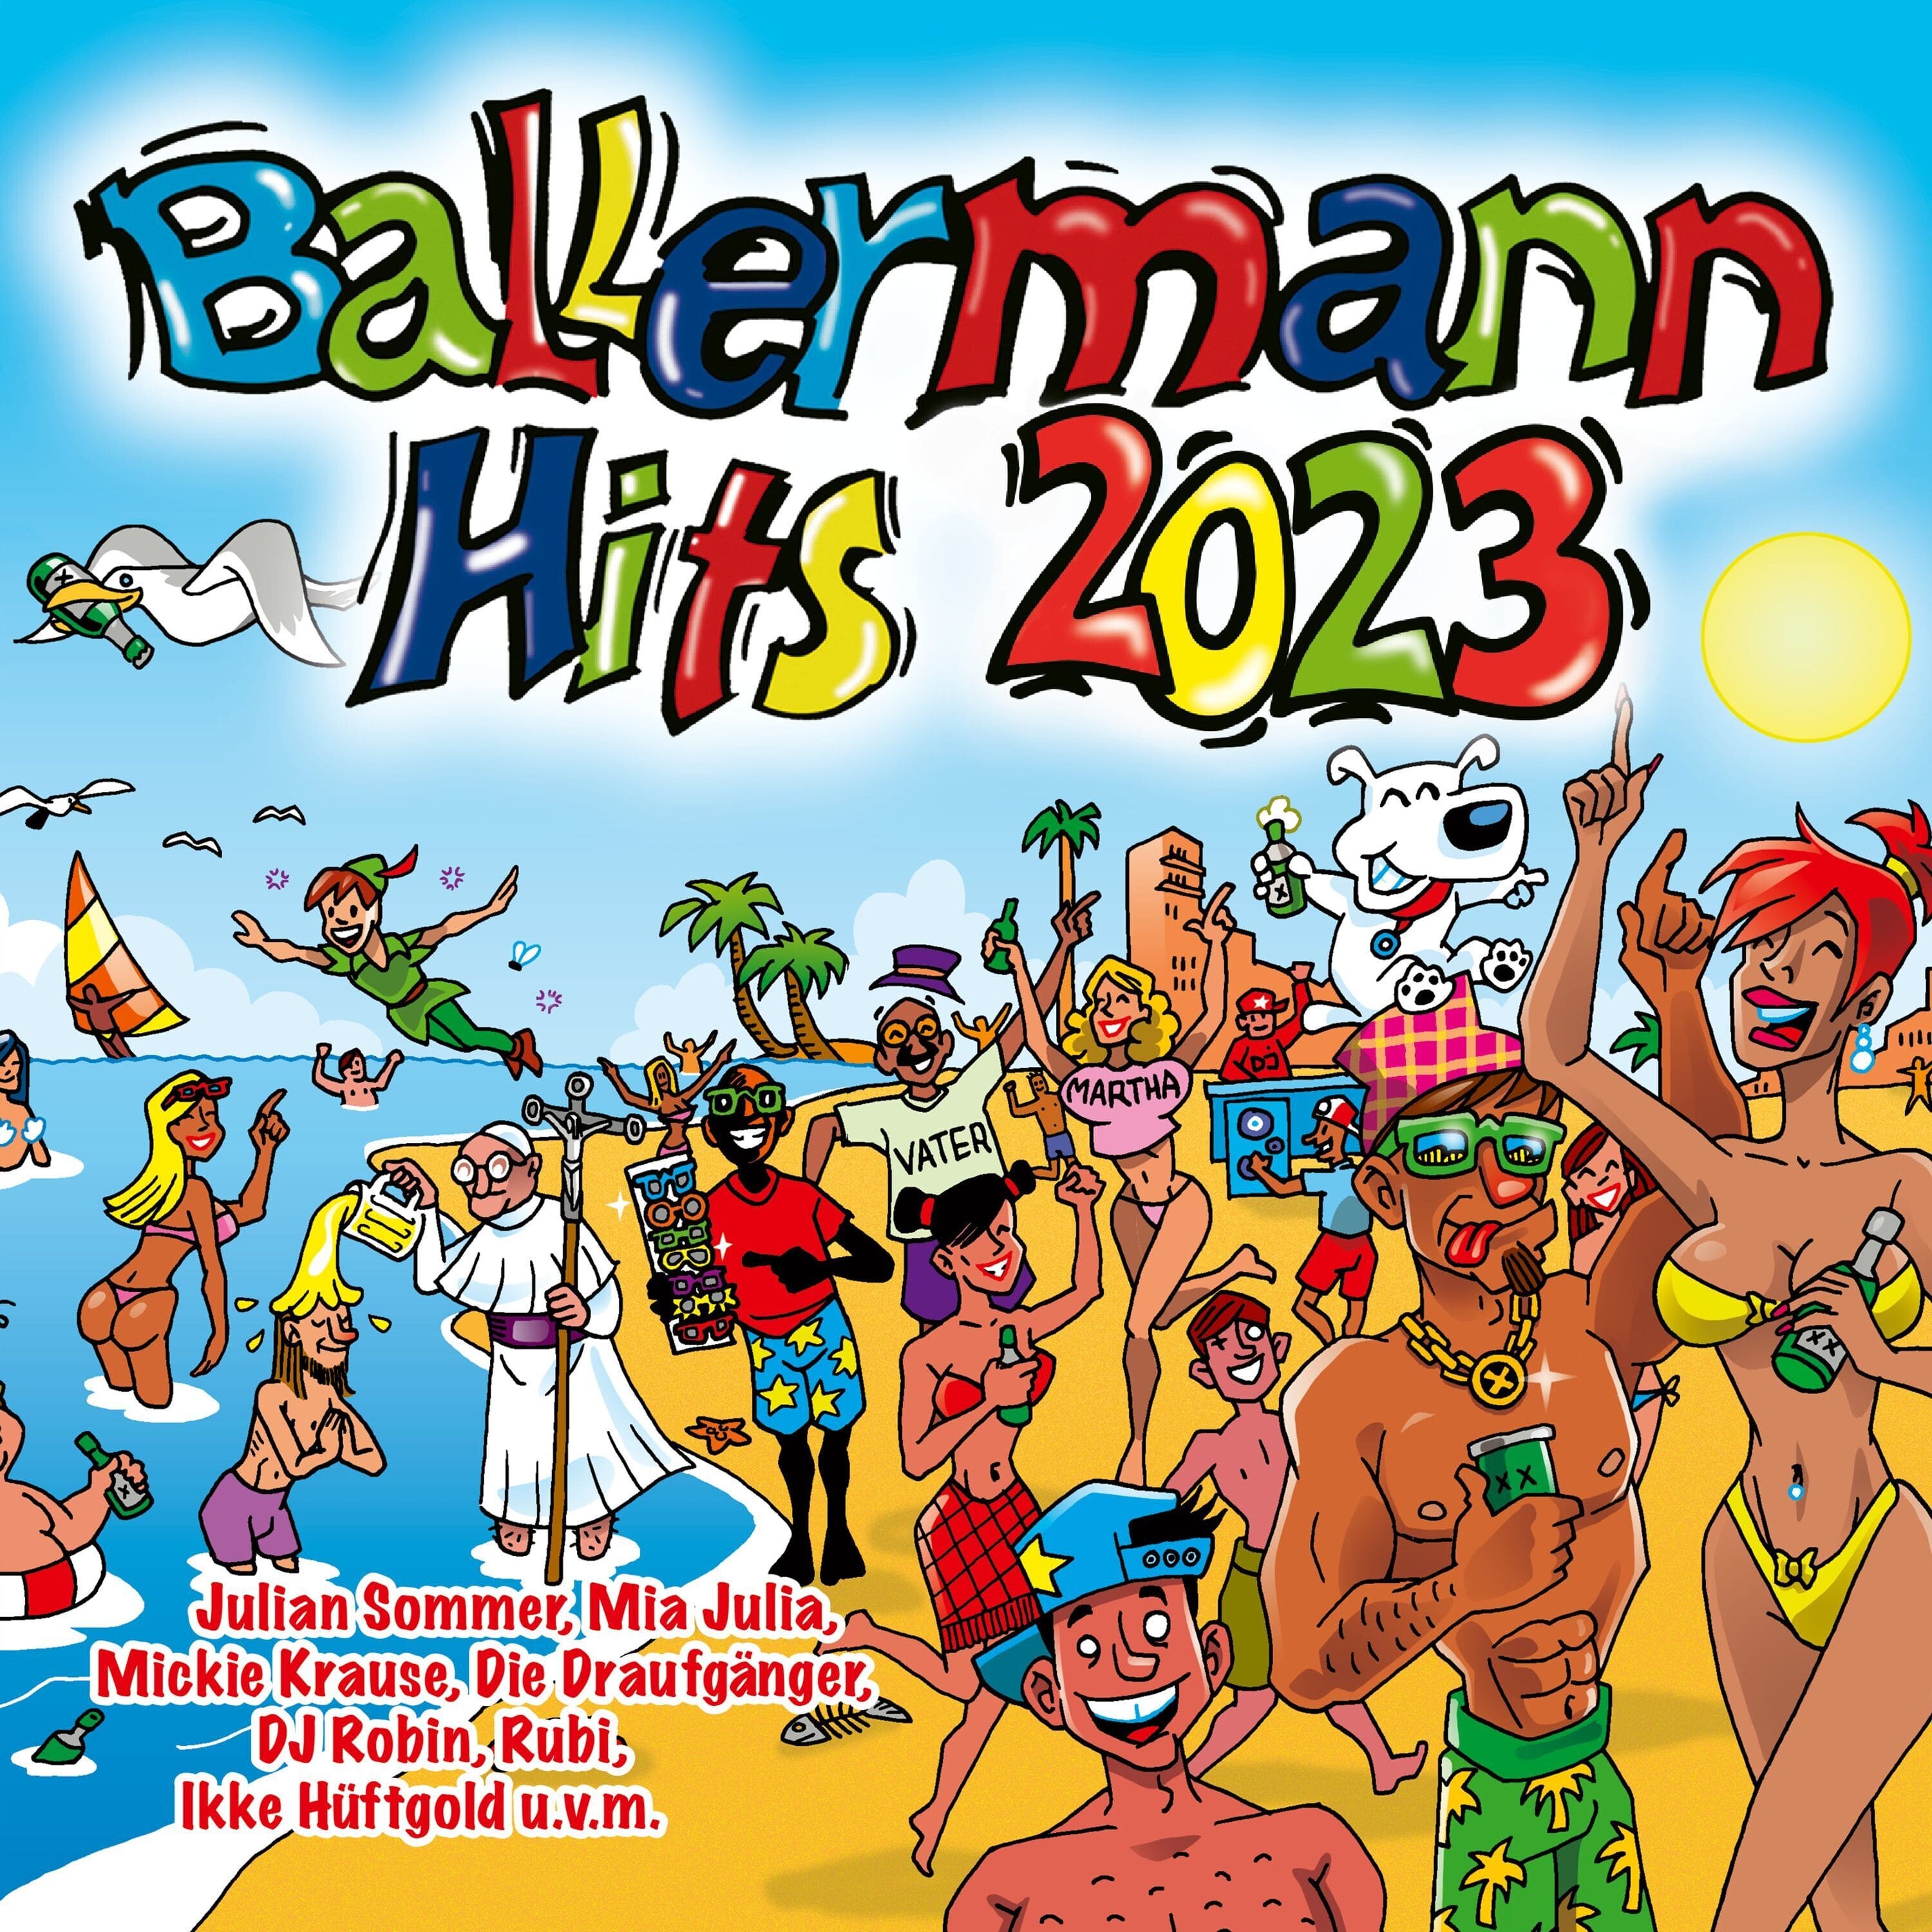 Bravado - 2CD Artists Ballermann - Various Hits - 2023